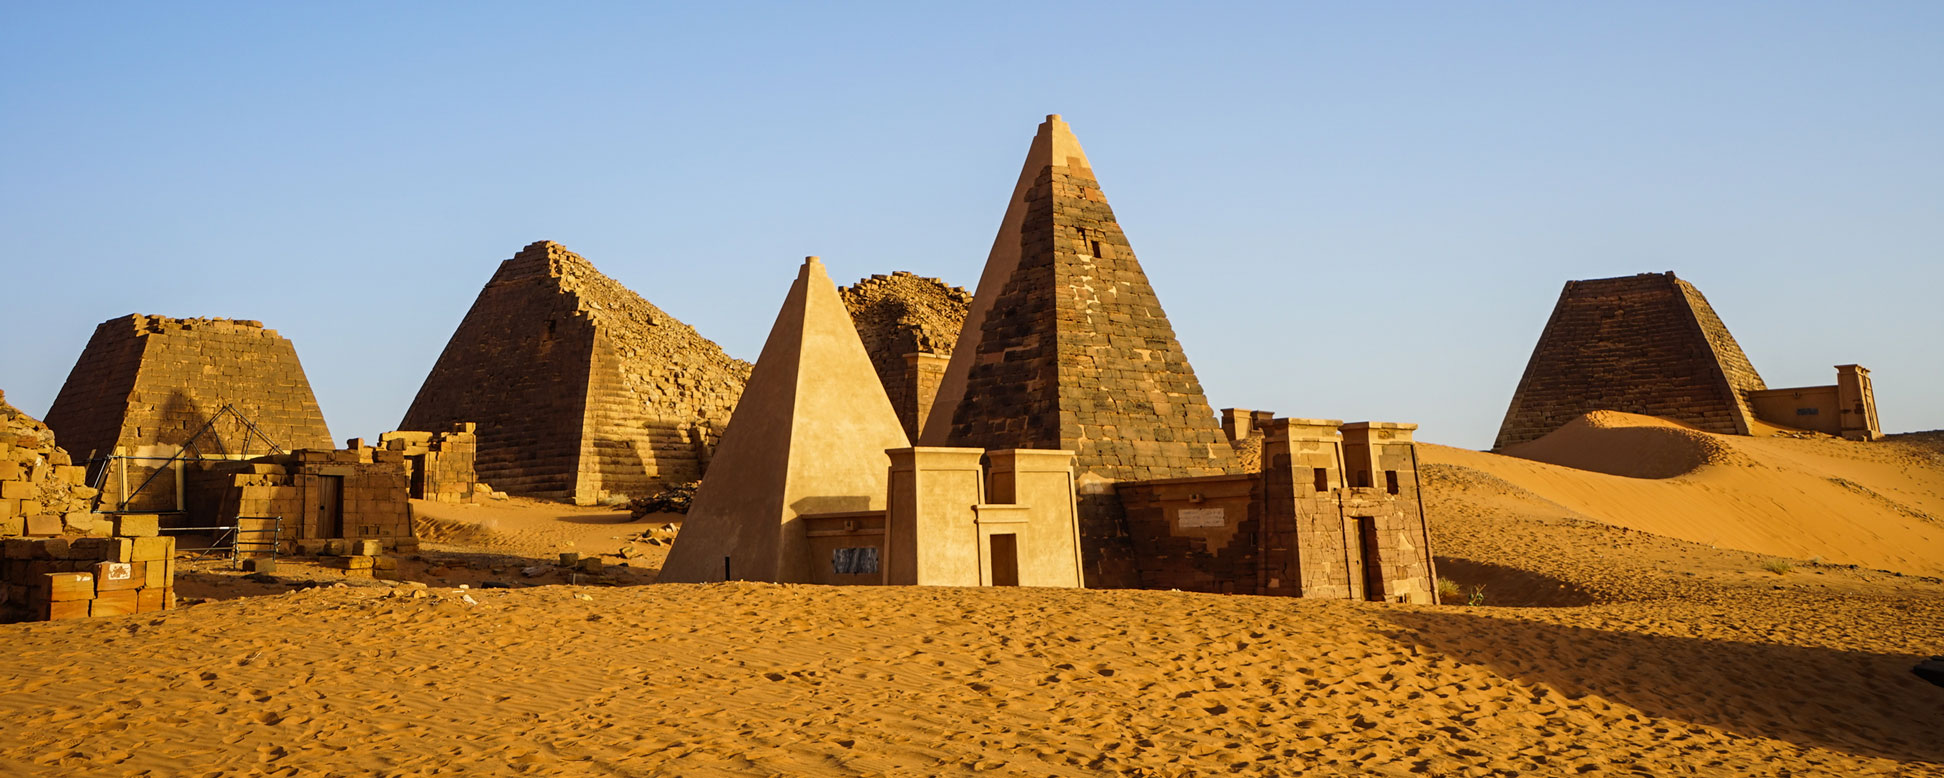 The pyramids of Meroë in Nubia (Sudan.)